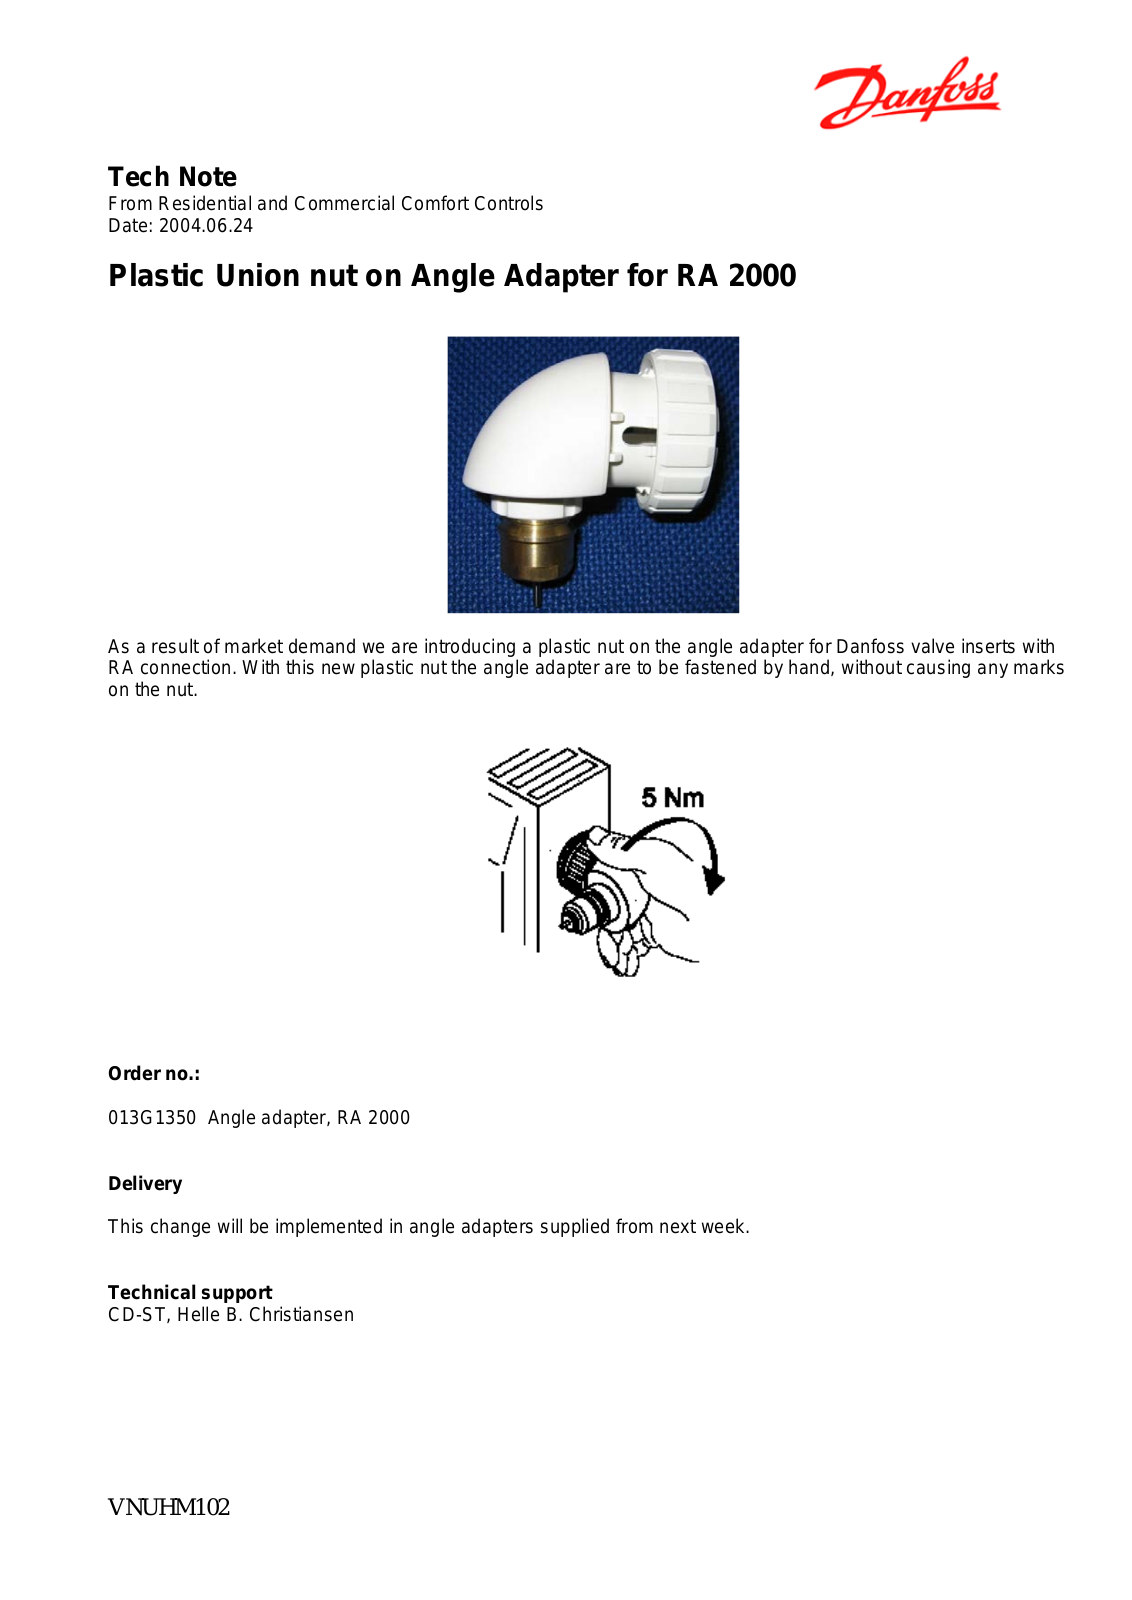 Danfoss Plastic Union nut on Angle Adapter for RA 2000 Fact sheet